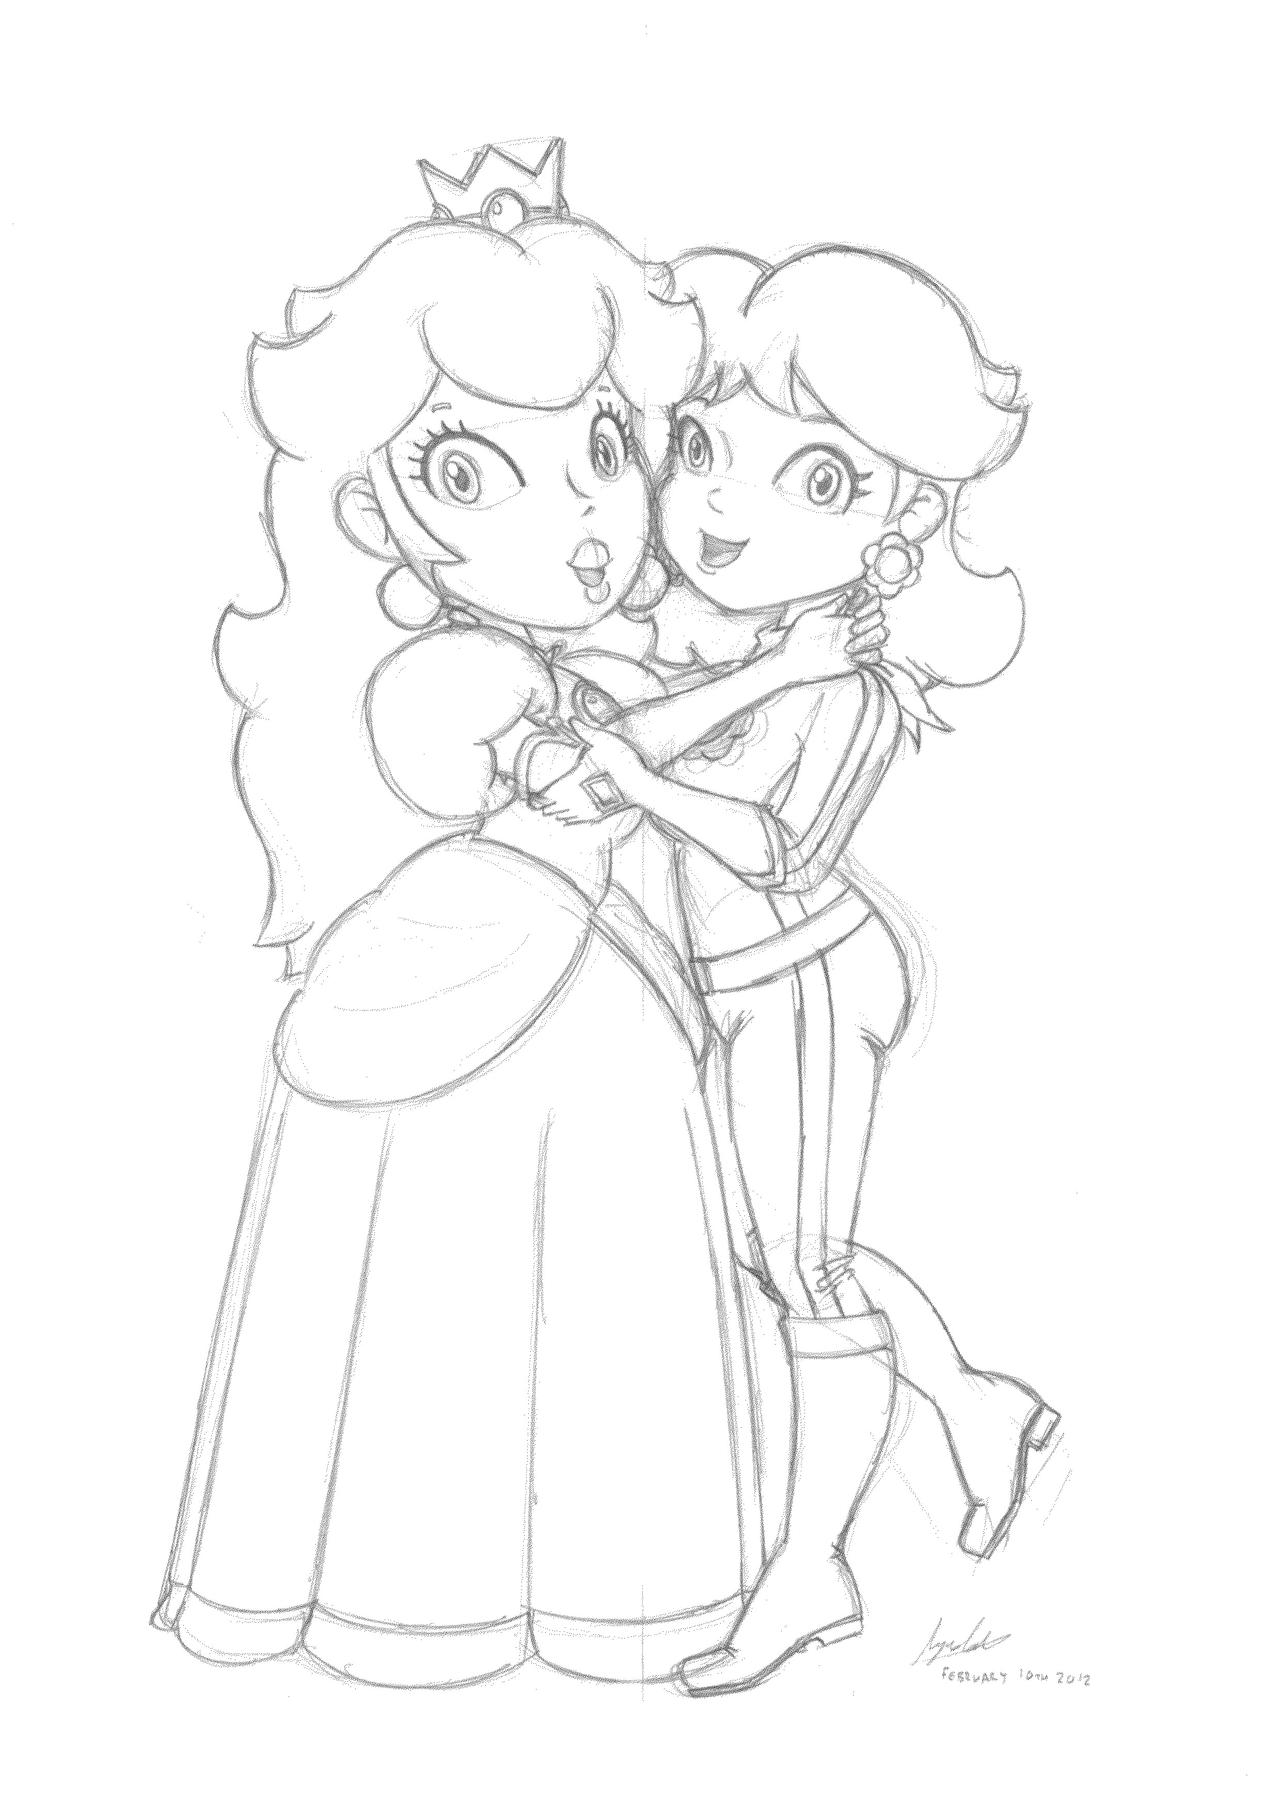 Peach hugging daisy sketch by famousmari on